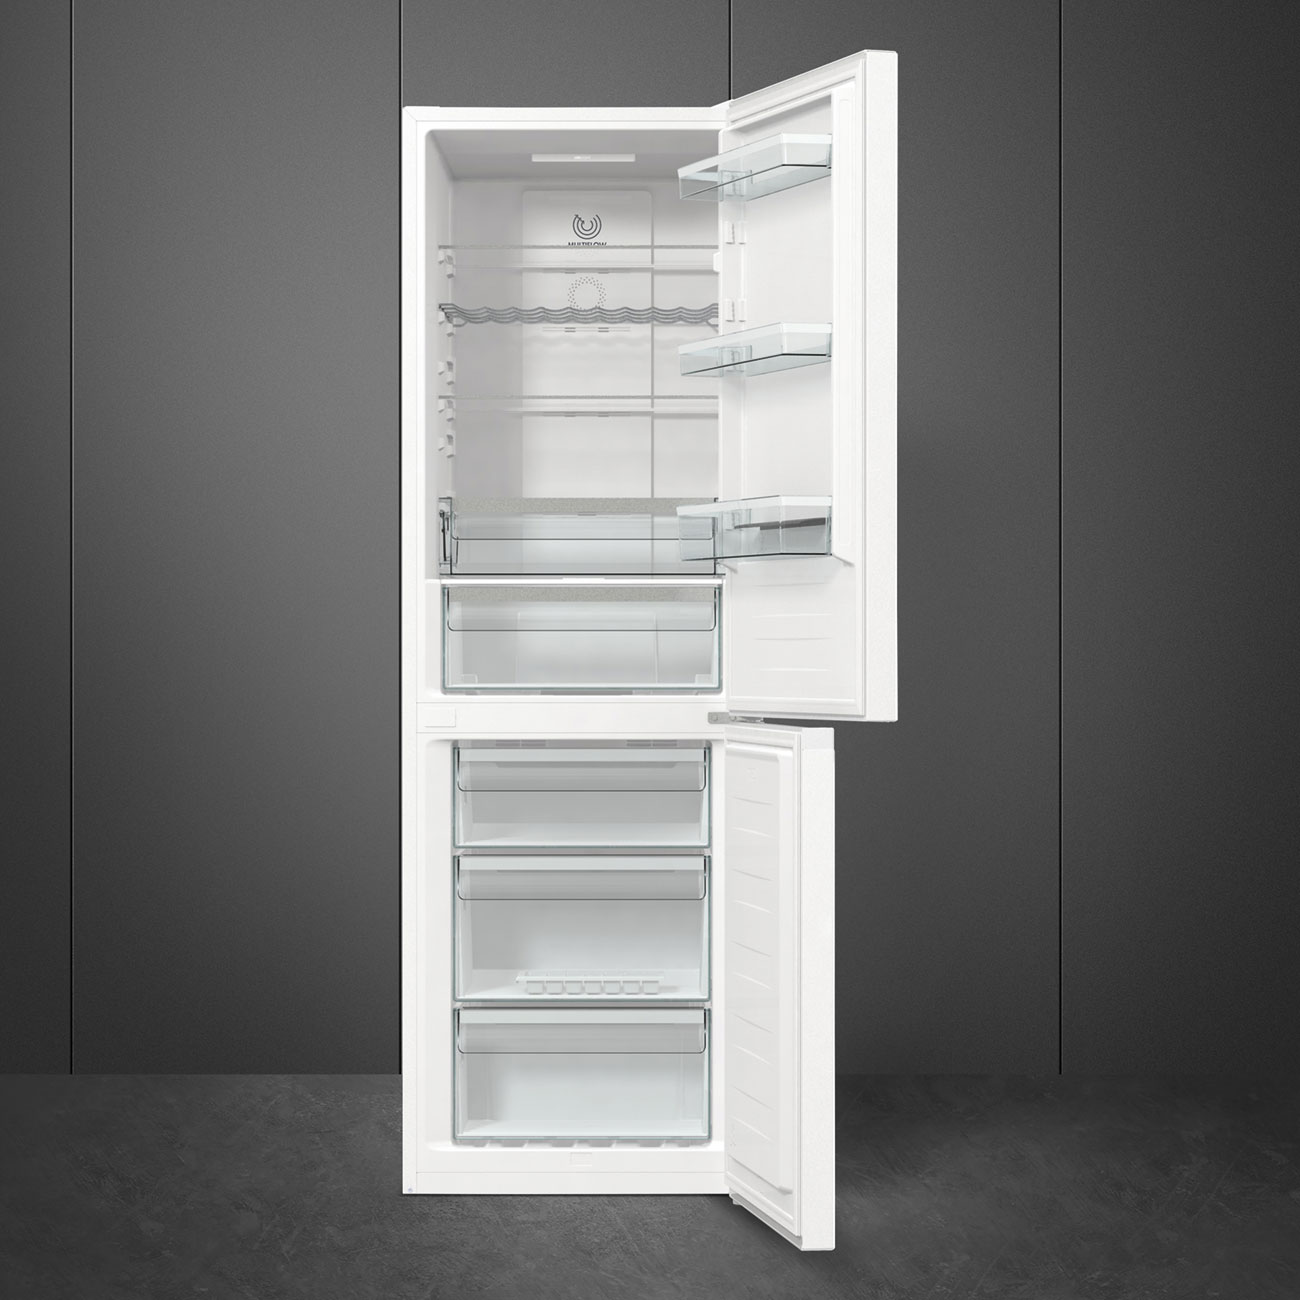 Bottom Mount Free standing refrigerator - Smeg_2